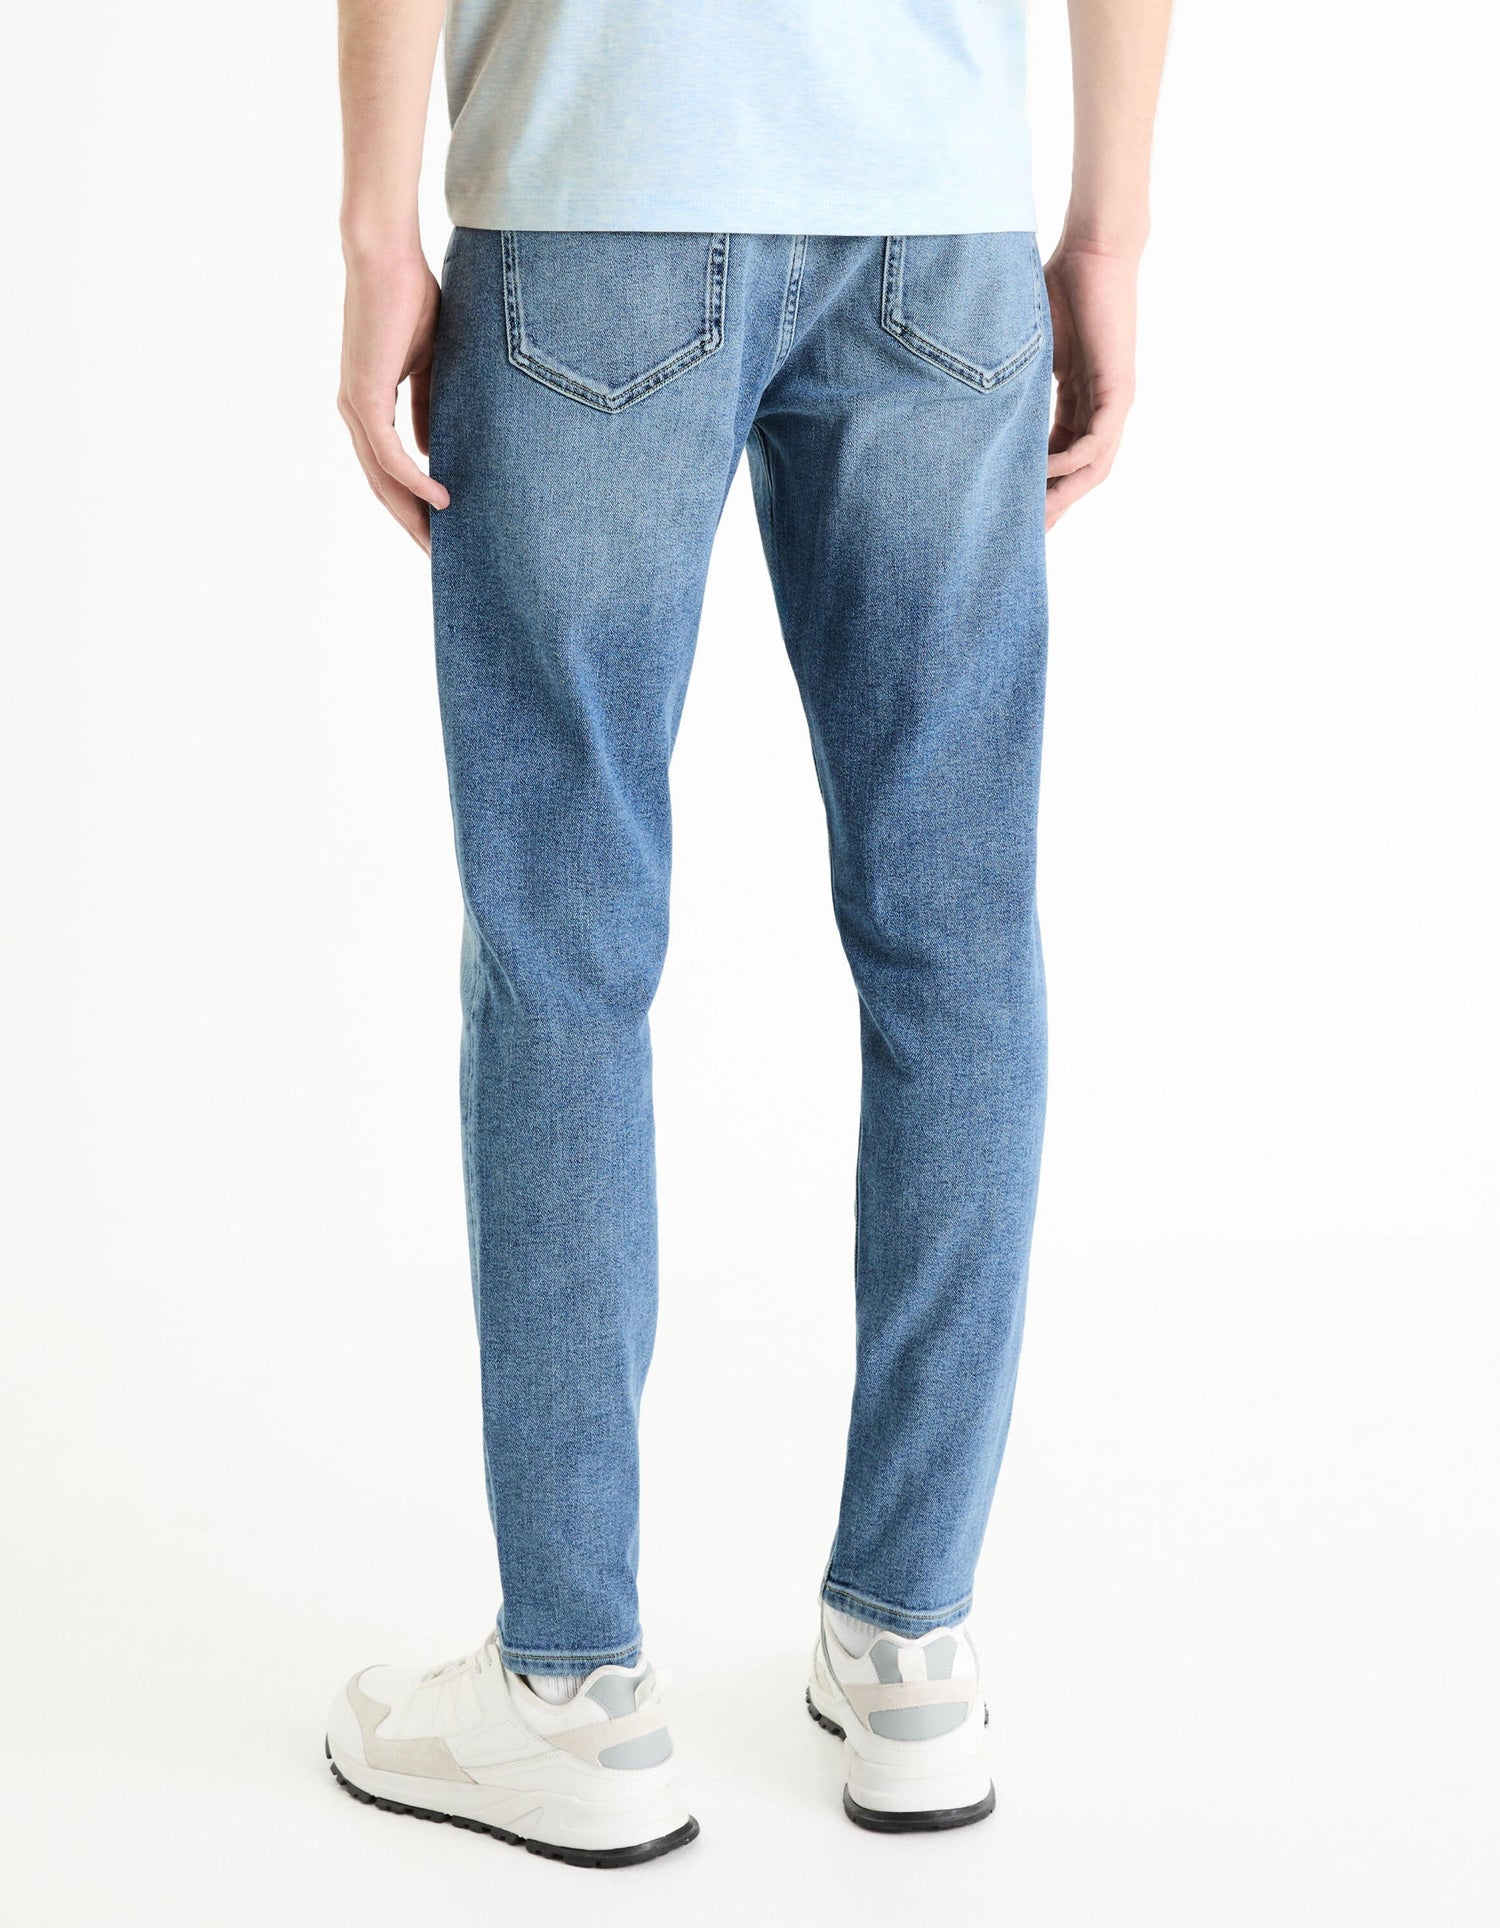 C25 Slim Stretch Jeans 3 Lengths - Blue_DOFINE25_DOUBLE STONE_04